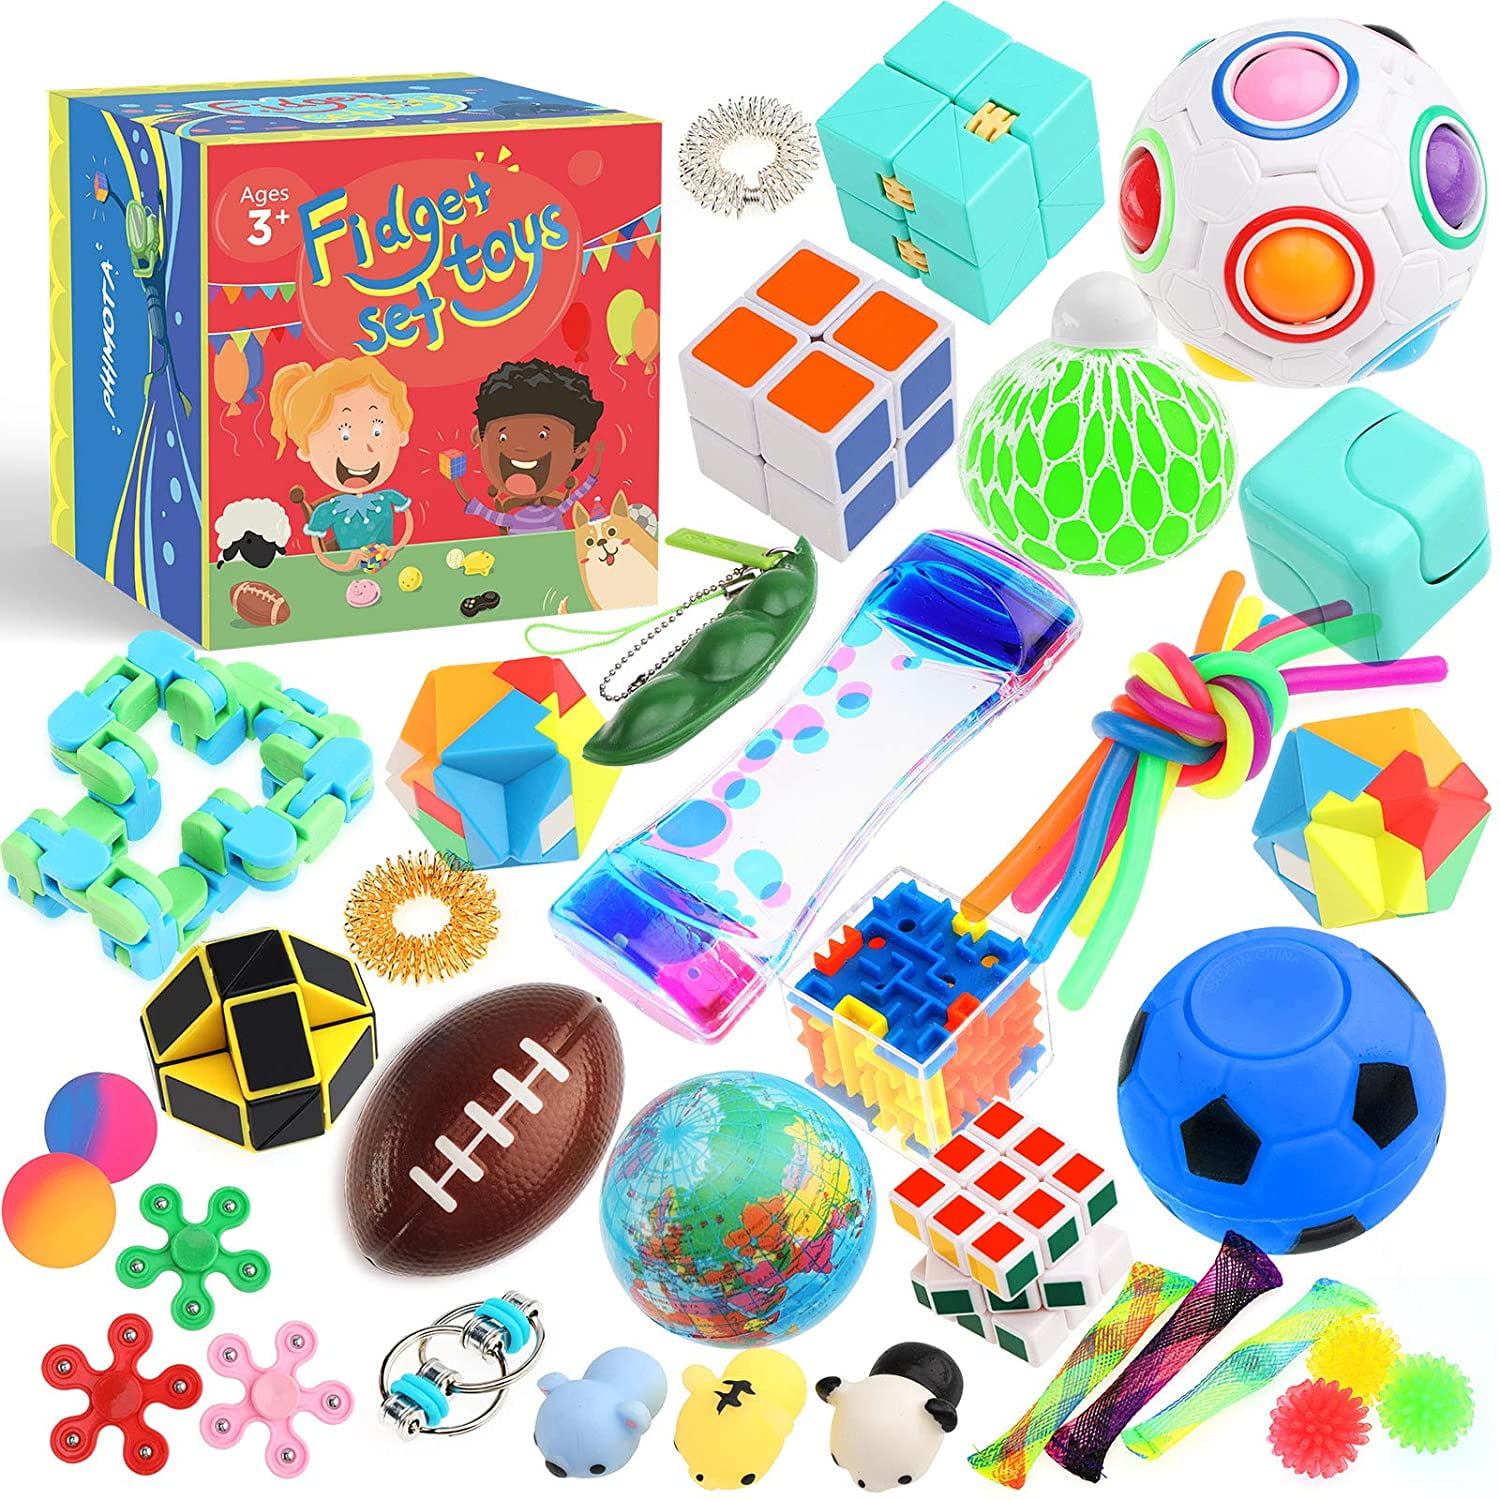 Details about   Fidget Toys Set Sensory Tools Bundle Stress Relief Hand Kids Adult Toy 22-28Pack 